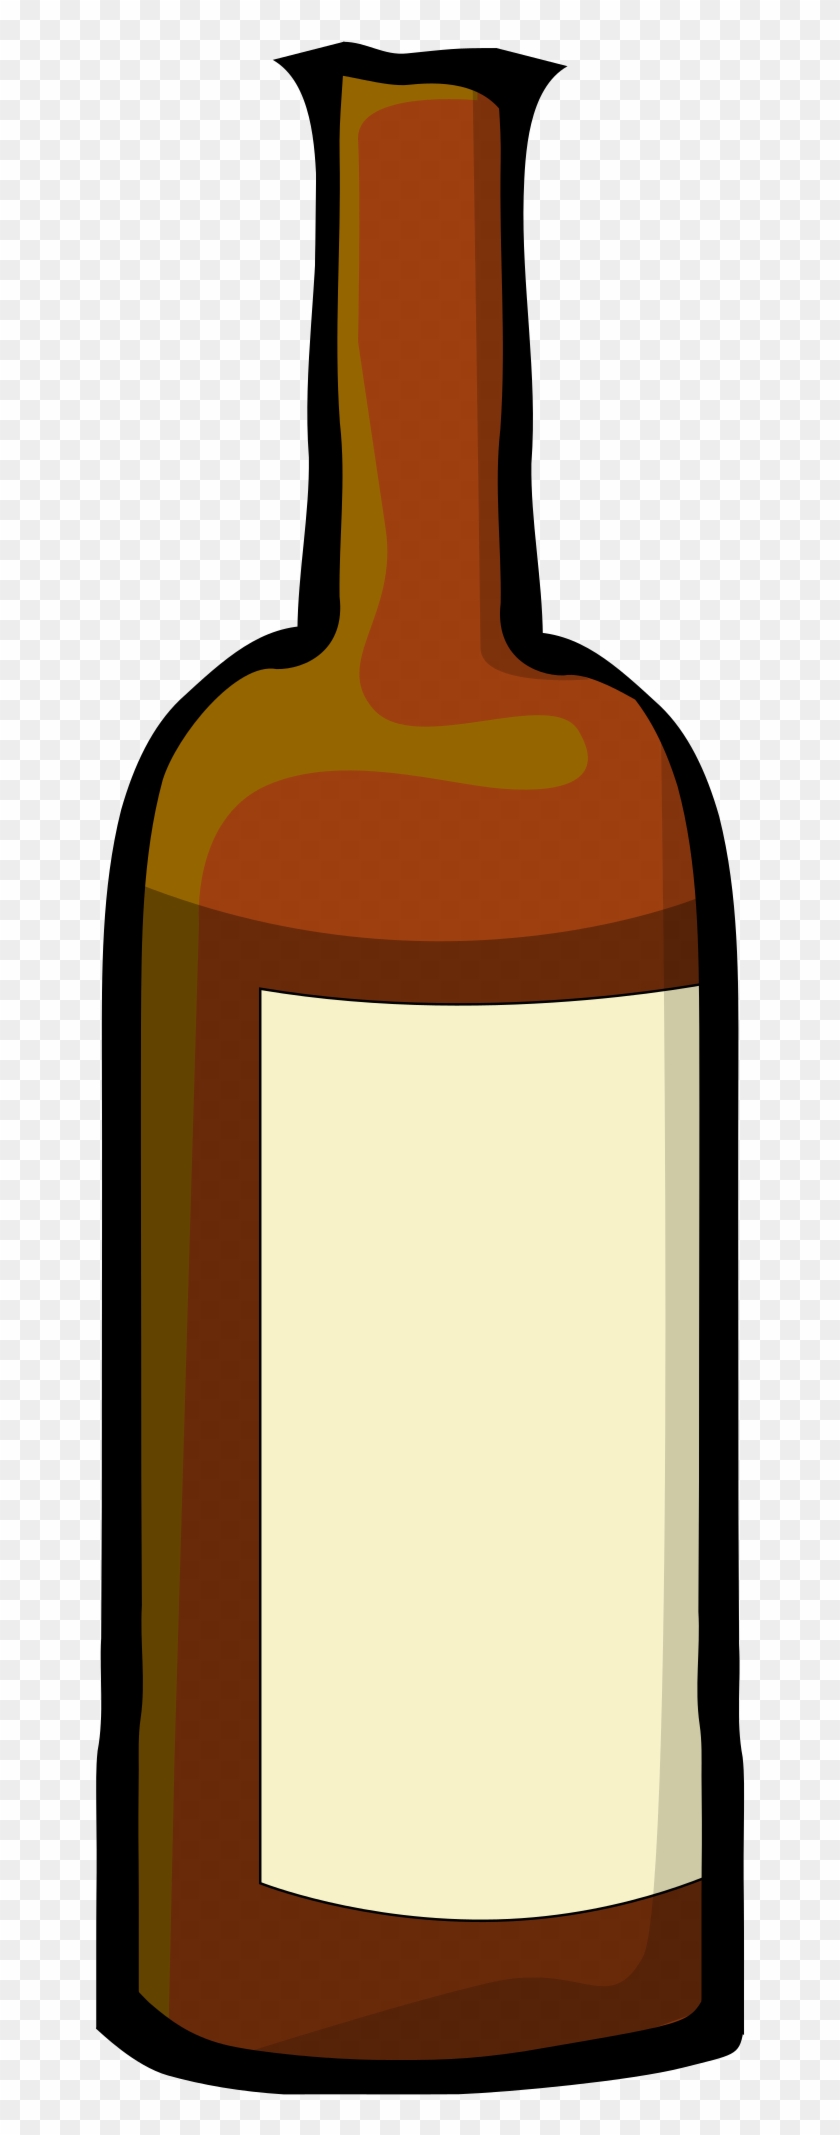 Clipart Wine Bottle - Wine Bottle Clip Art #57917